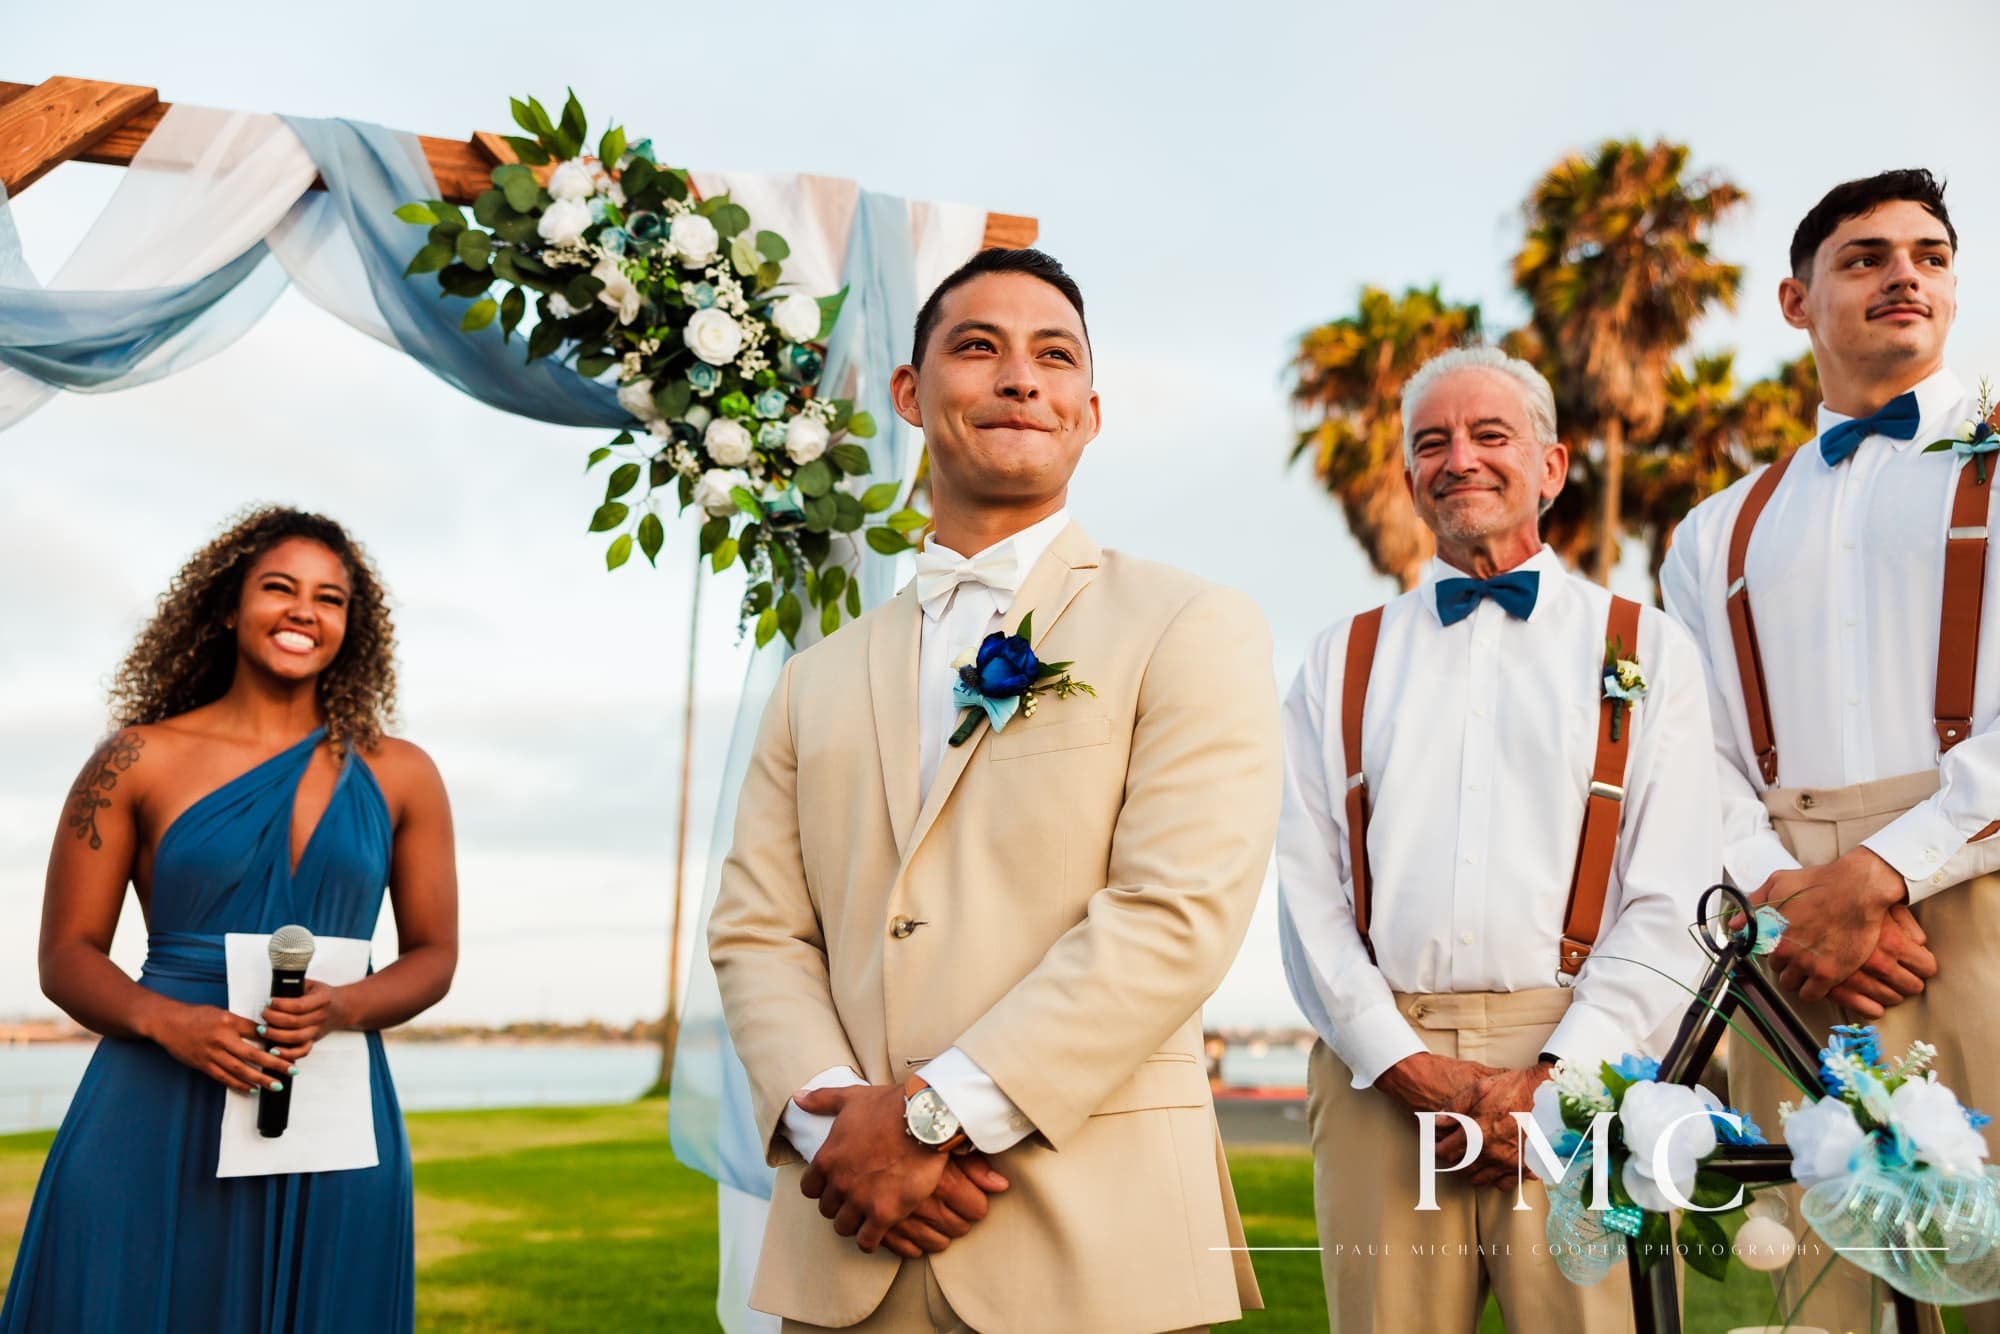 Tower Beach Club - Mission Bay - Best San Diego Wedding Photographer-11.jpg